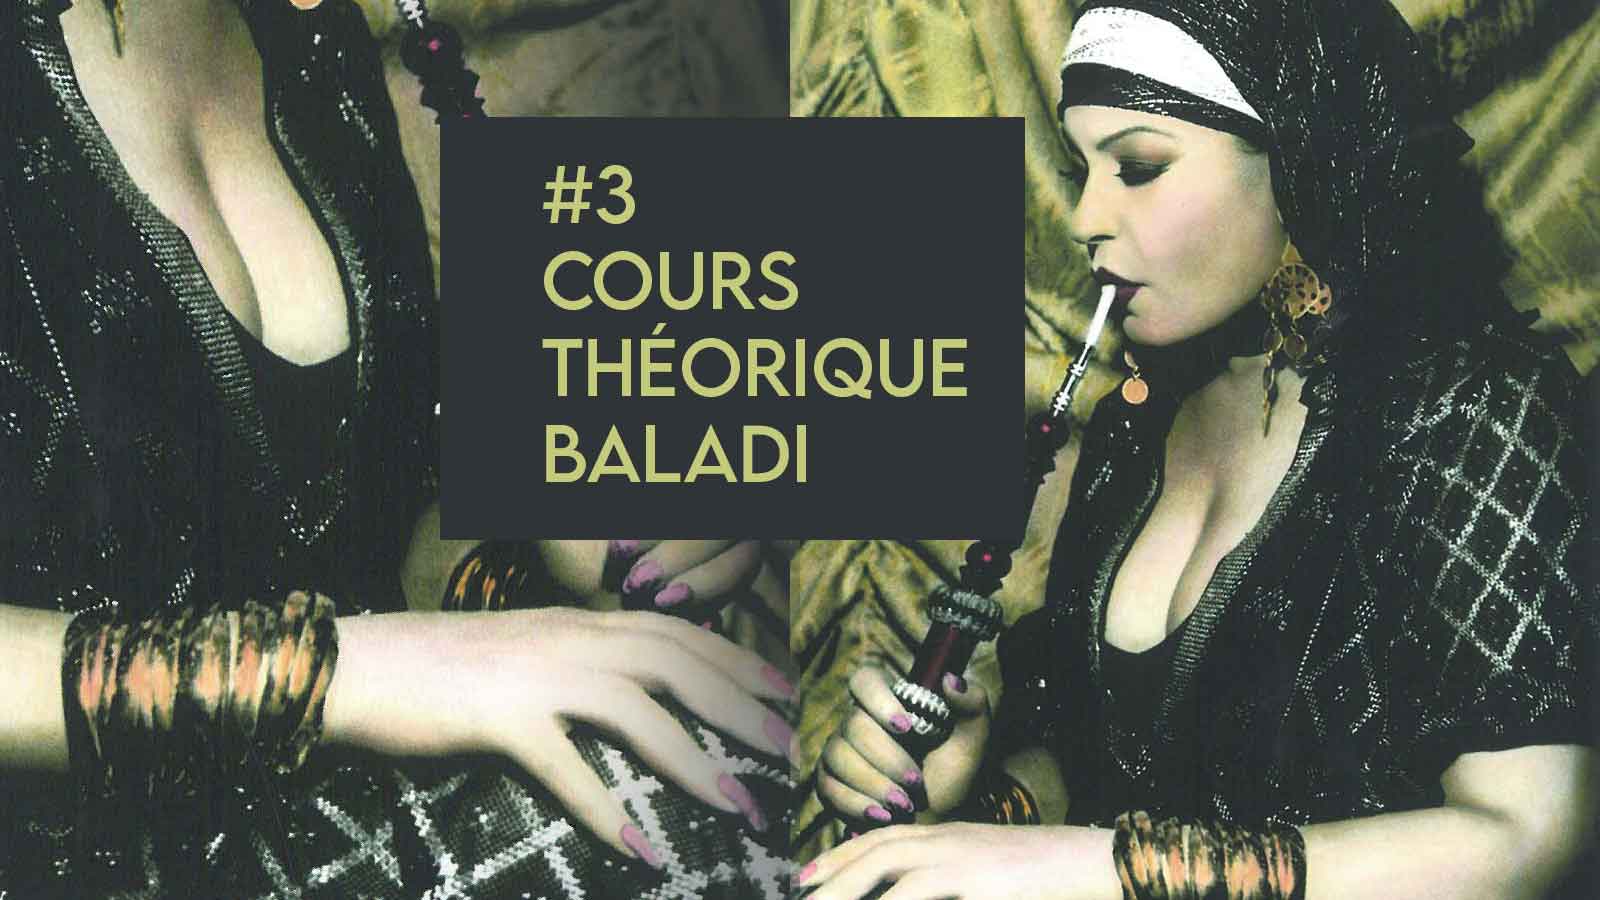 Cours 3 : Baladi théorie danse orientale en ligne